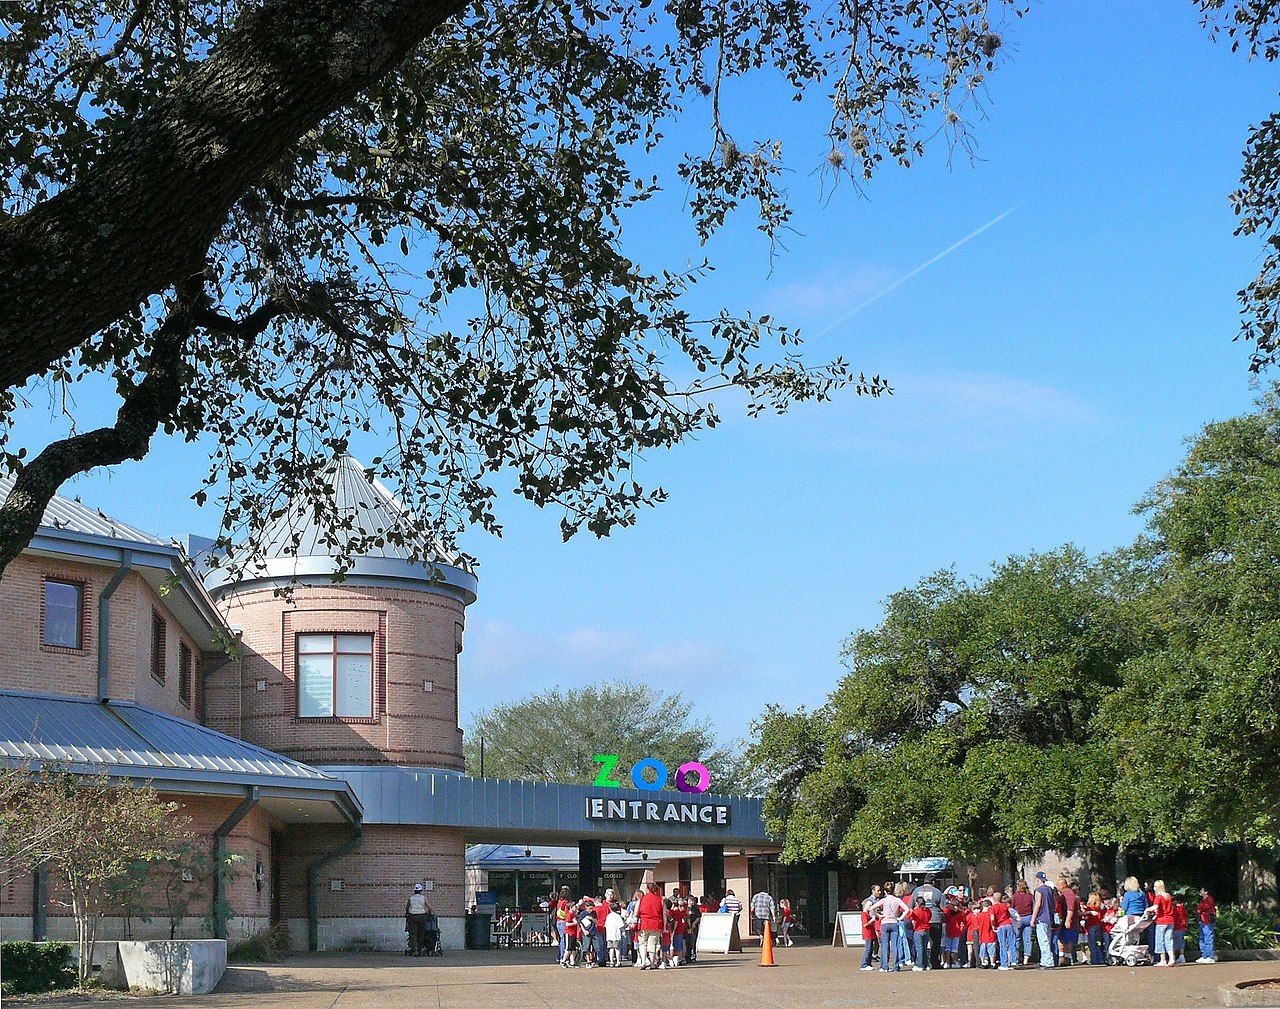 Entrance to the Houston Zoo